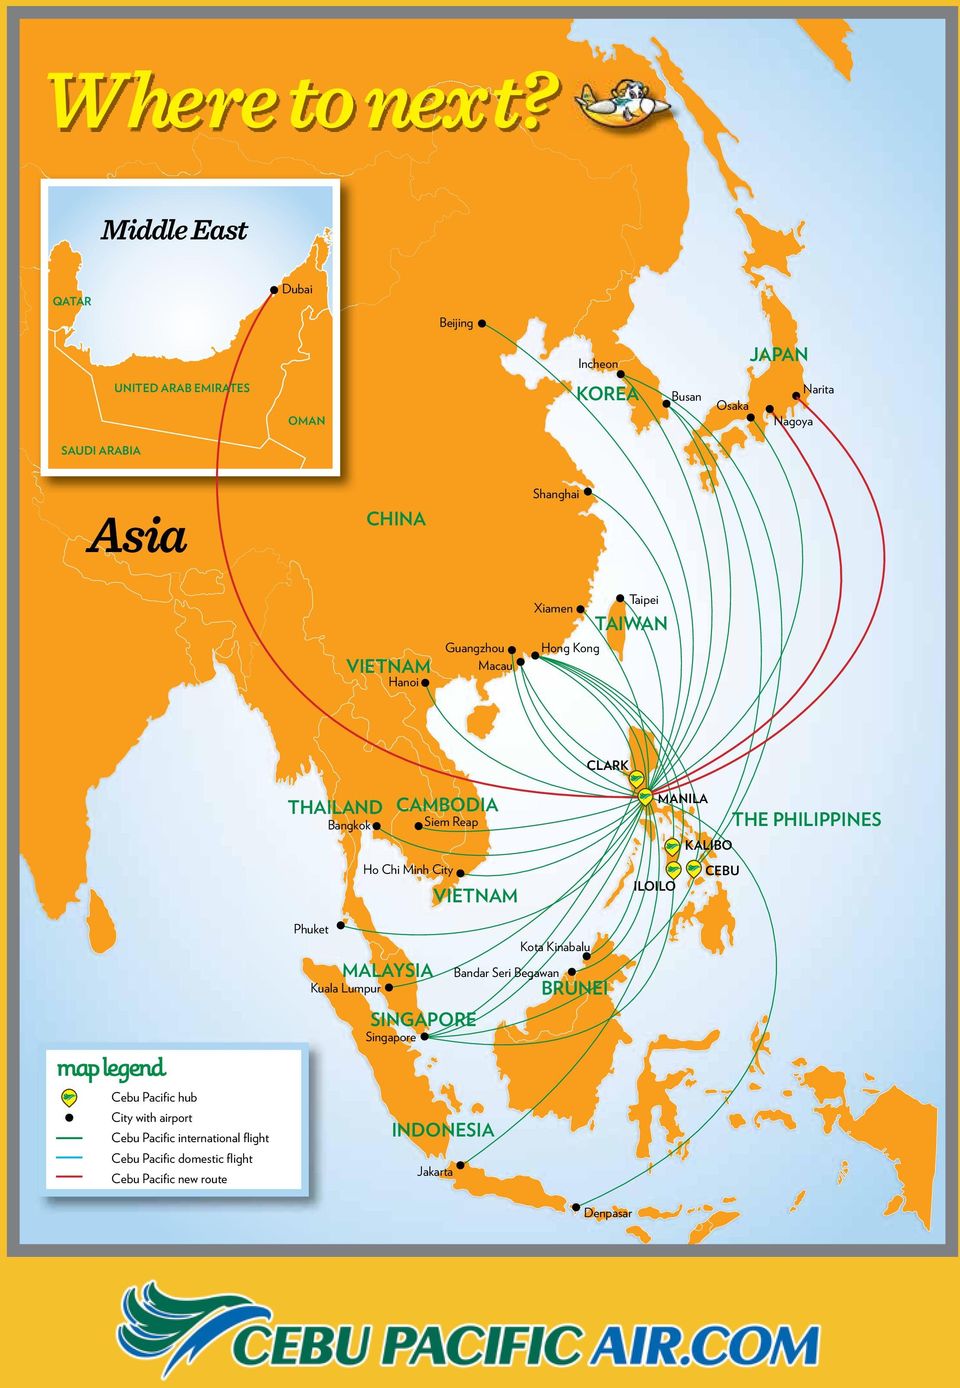 Macau Xiamen Hong Kong Taipei TAIWAN CLARK THAILAND Bangkok CAMBODIA Siem Reap Ho Chi Minh City VIETNAM MANILA KALIBO CEBU ILOILO THE PHILIPPINES map legend Cebu